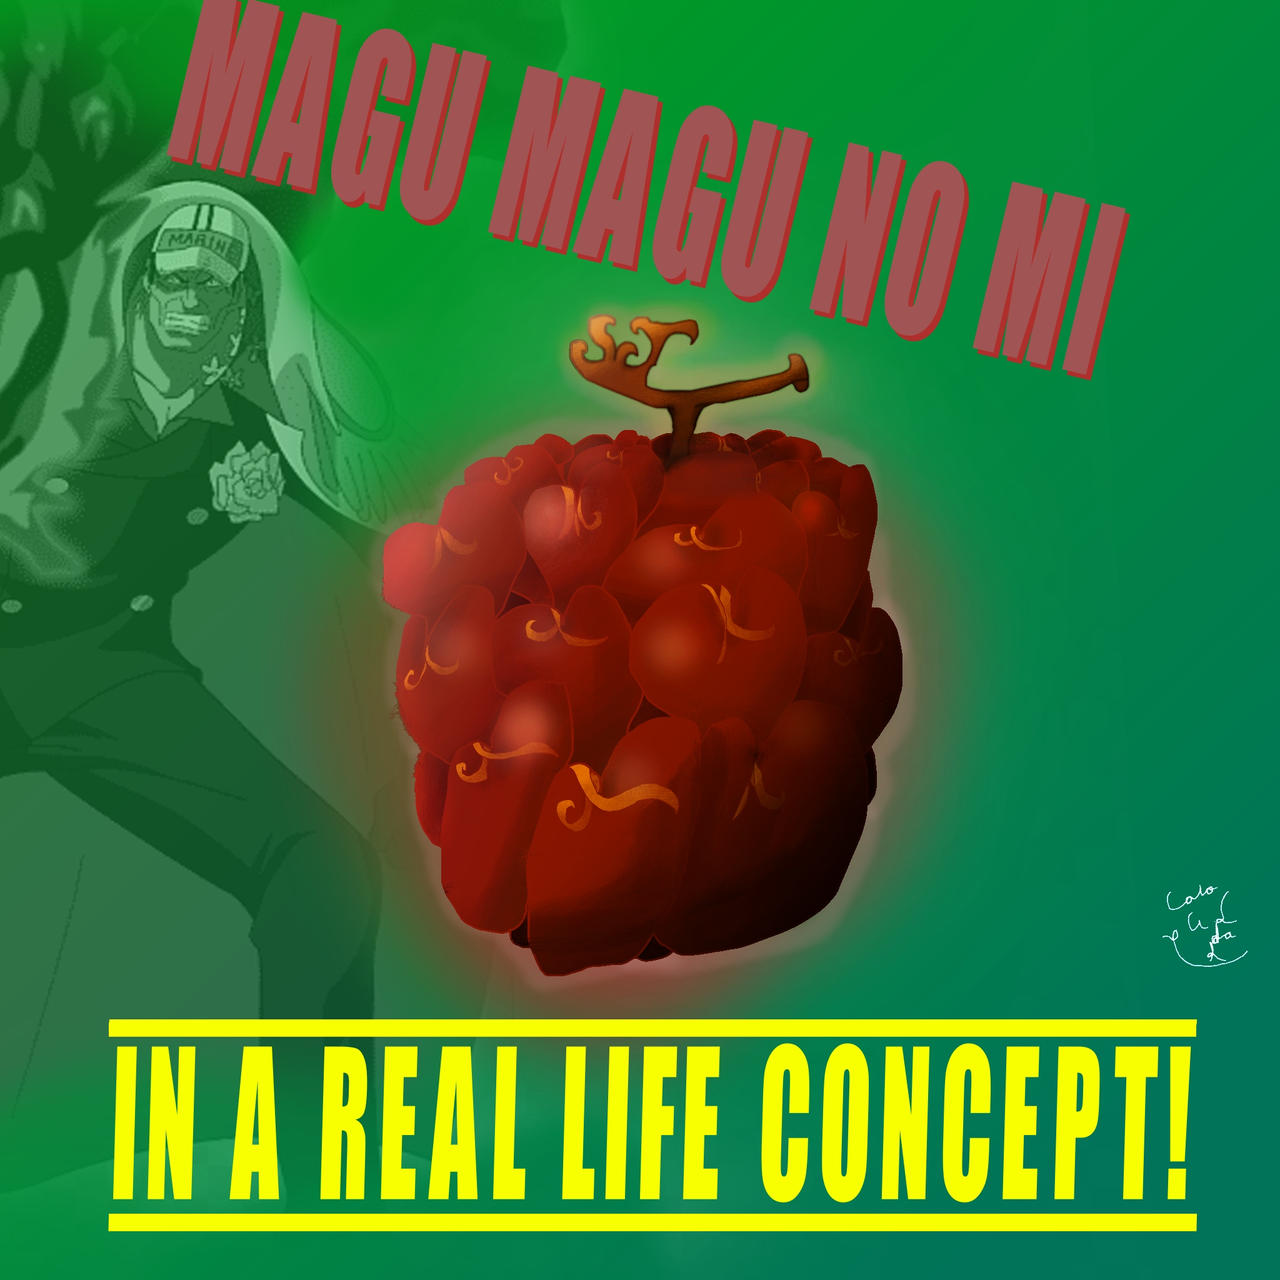 Magu Magu No Mi In A Real Life Concept! by CaioArts22 on DeviantArt